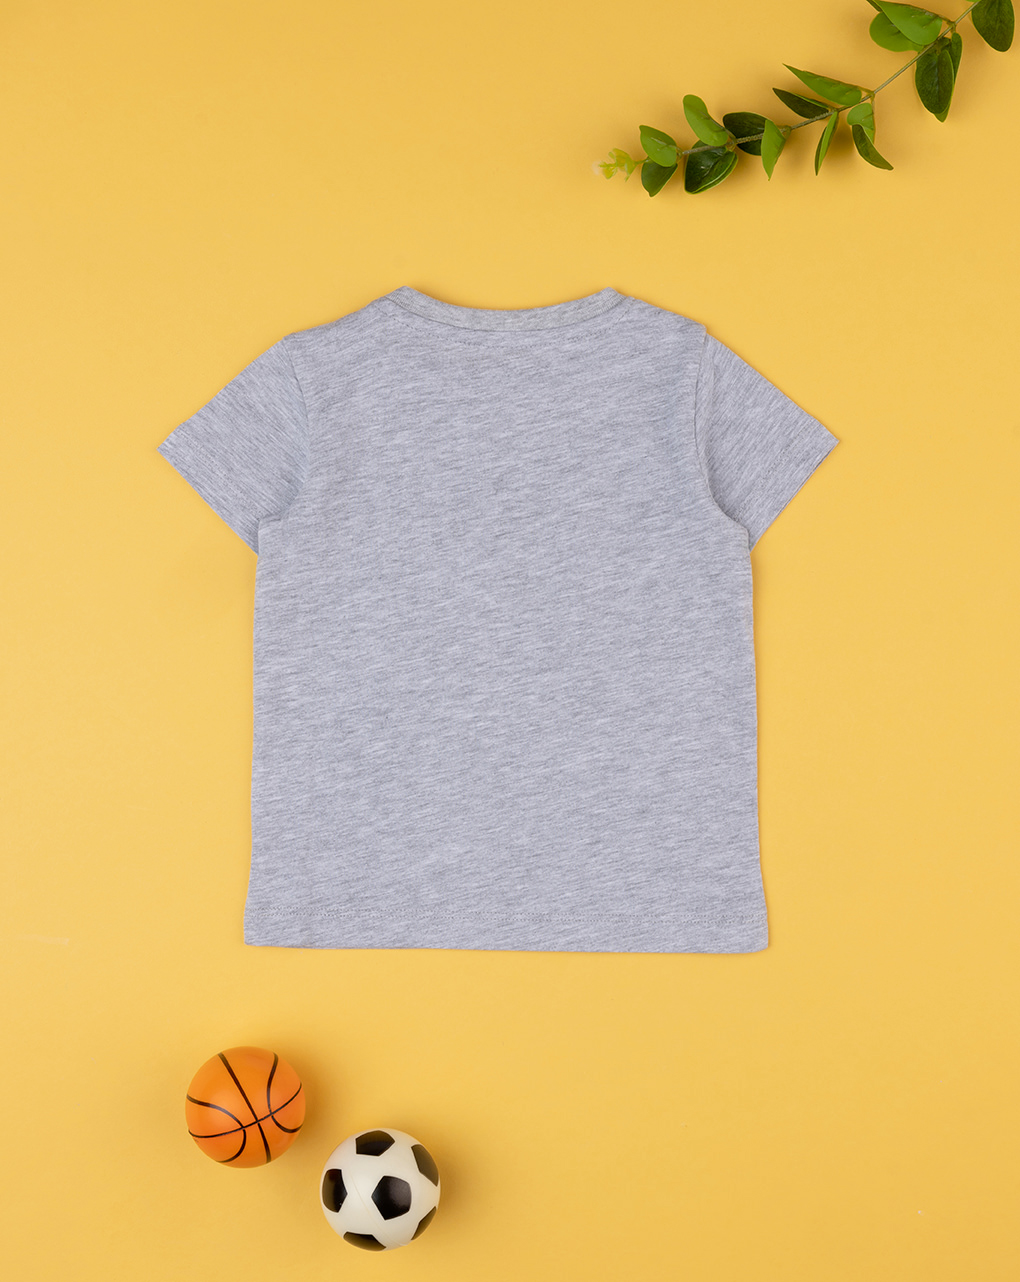 Camiseta prenatal infantil gris - Prénatal